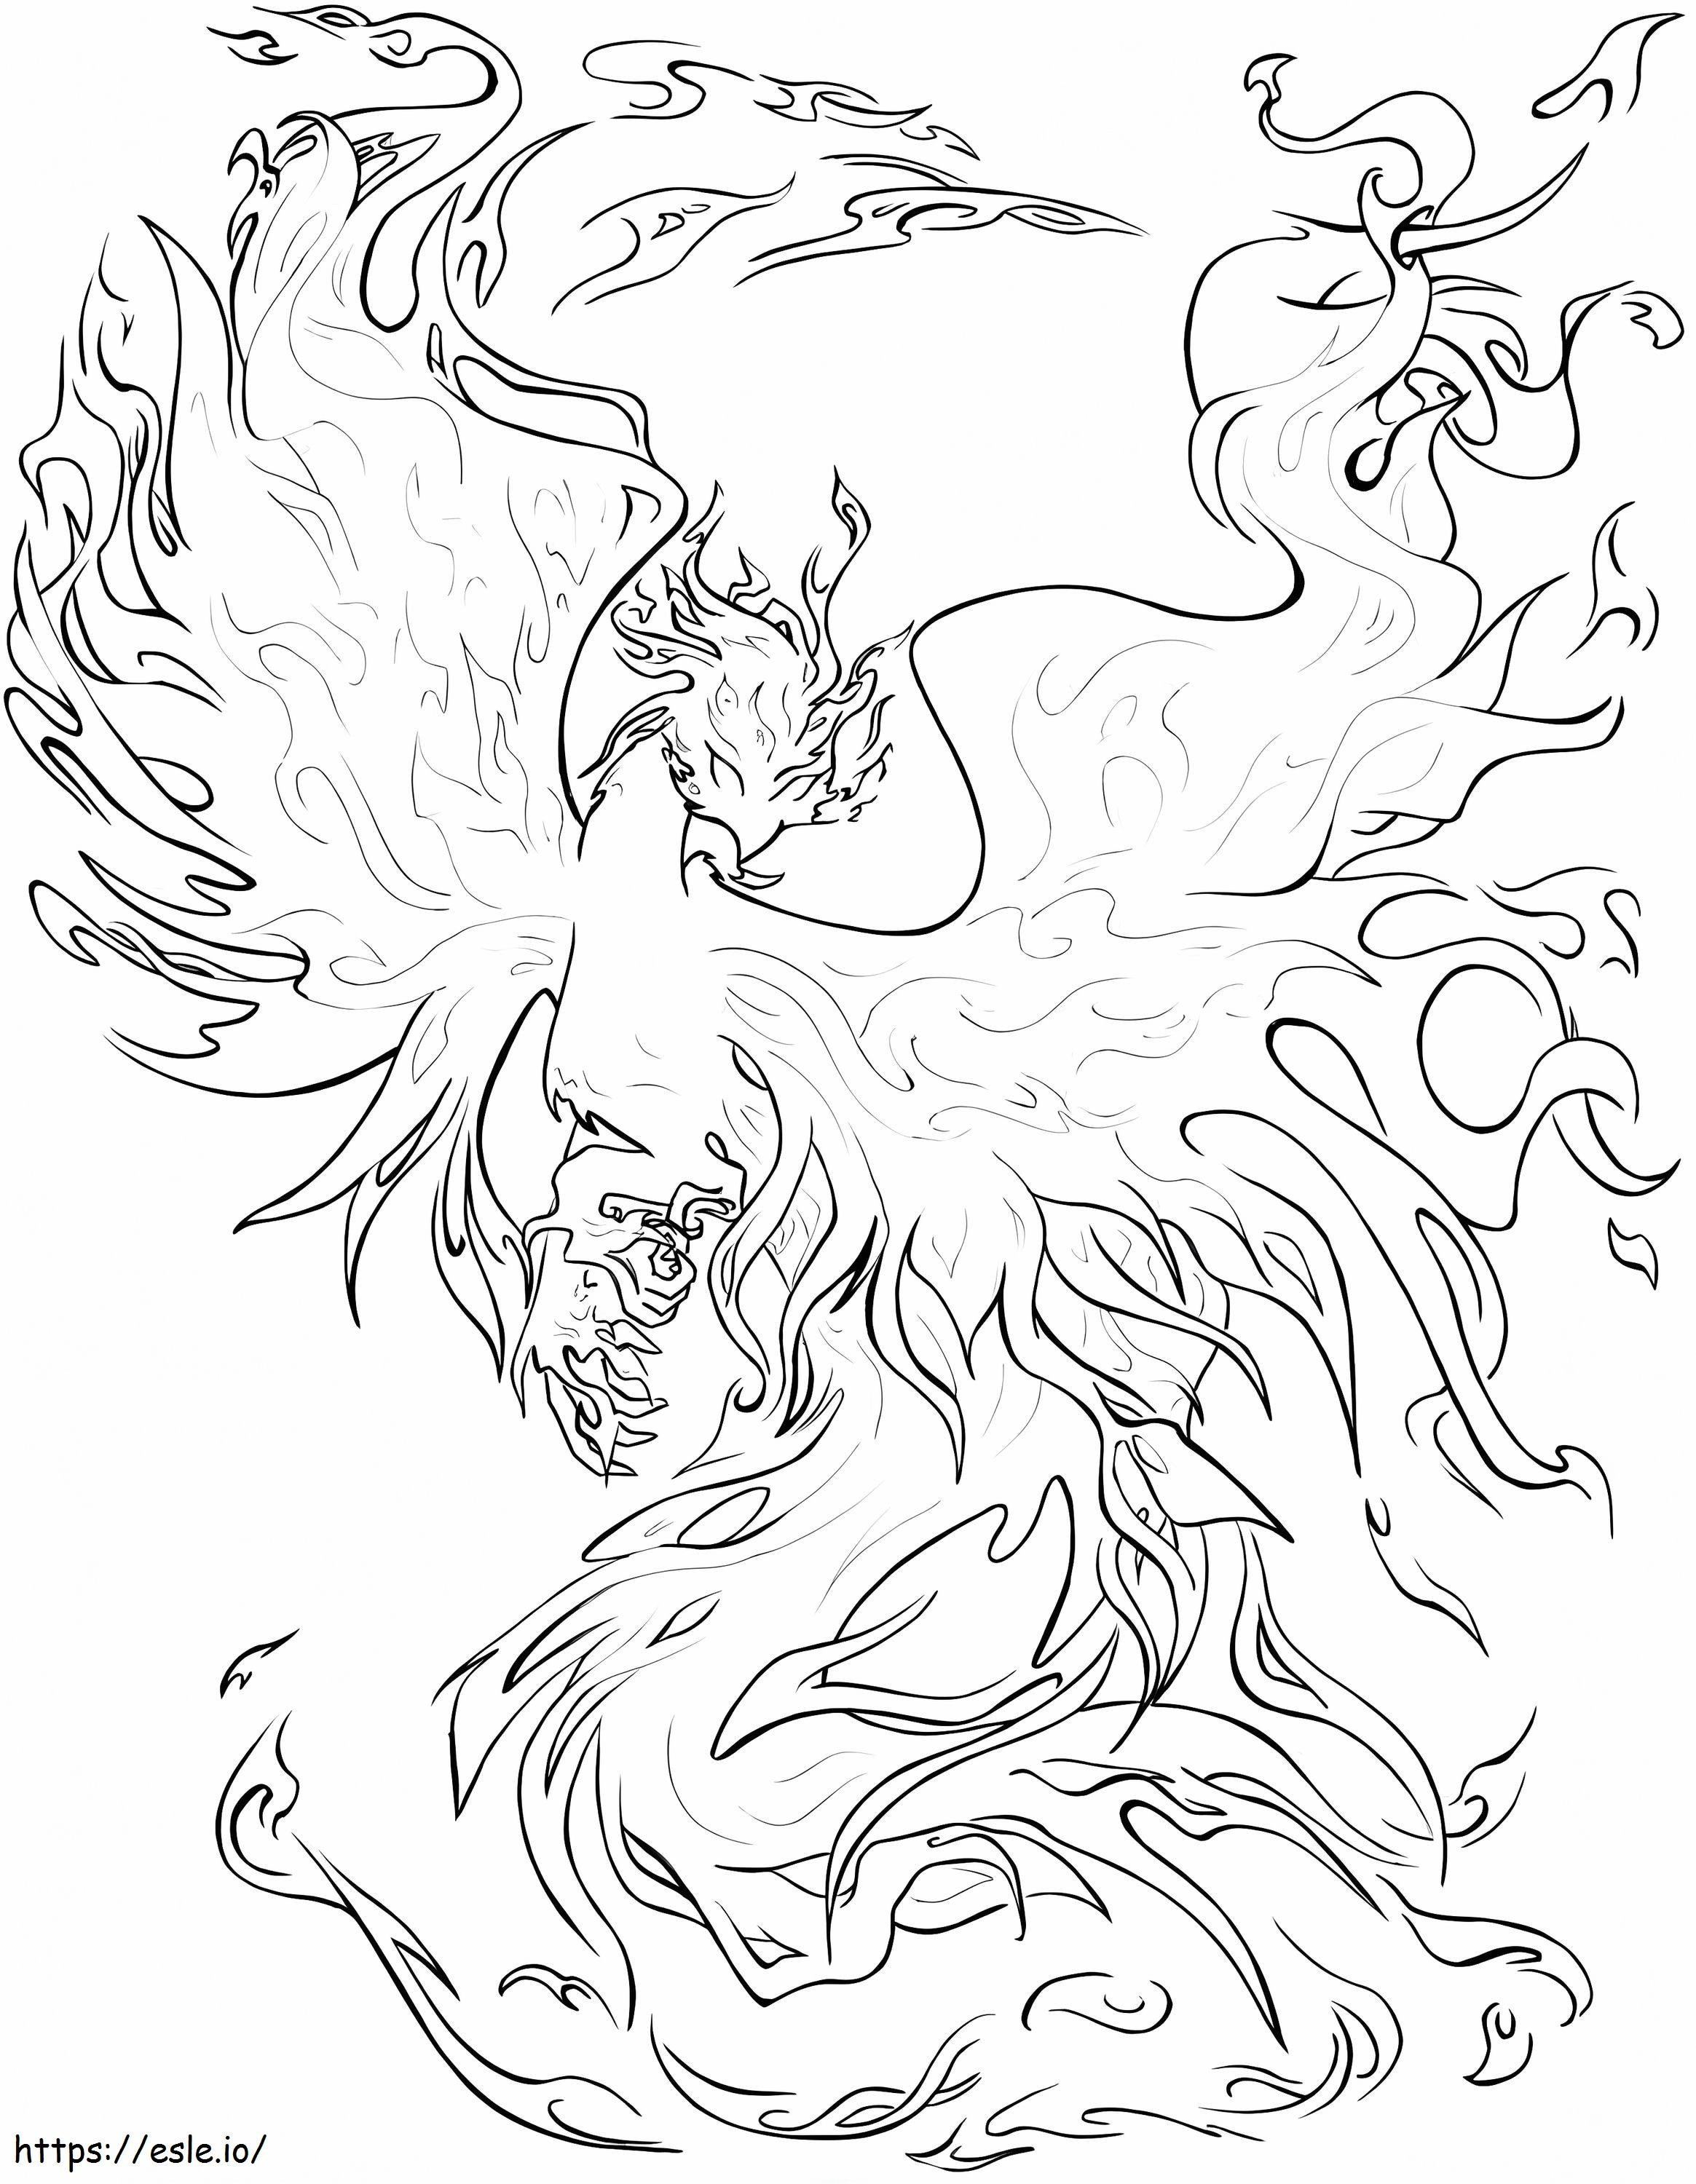 Fiery Phoenix coloring page